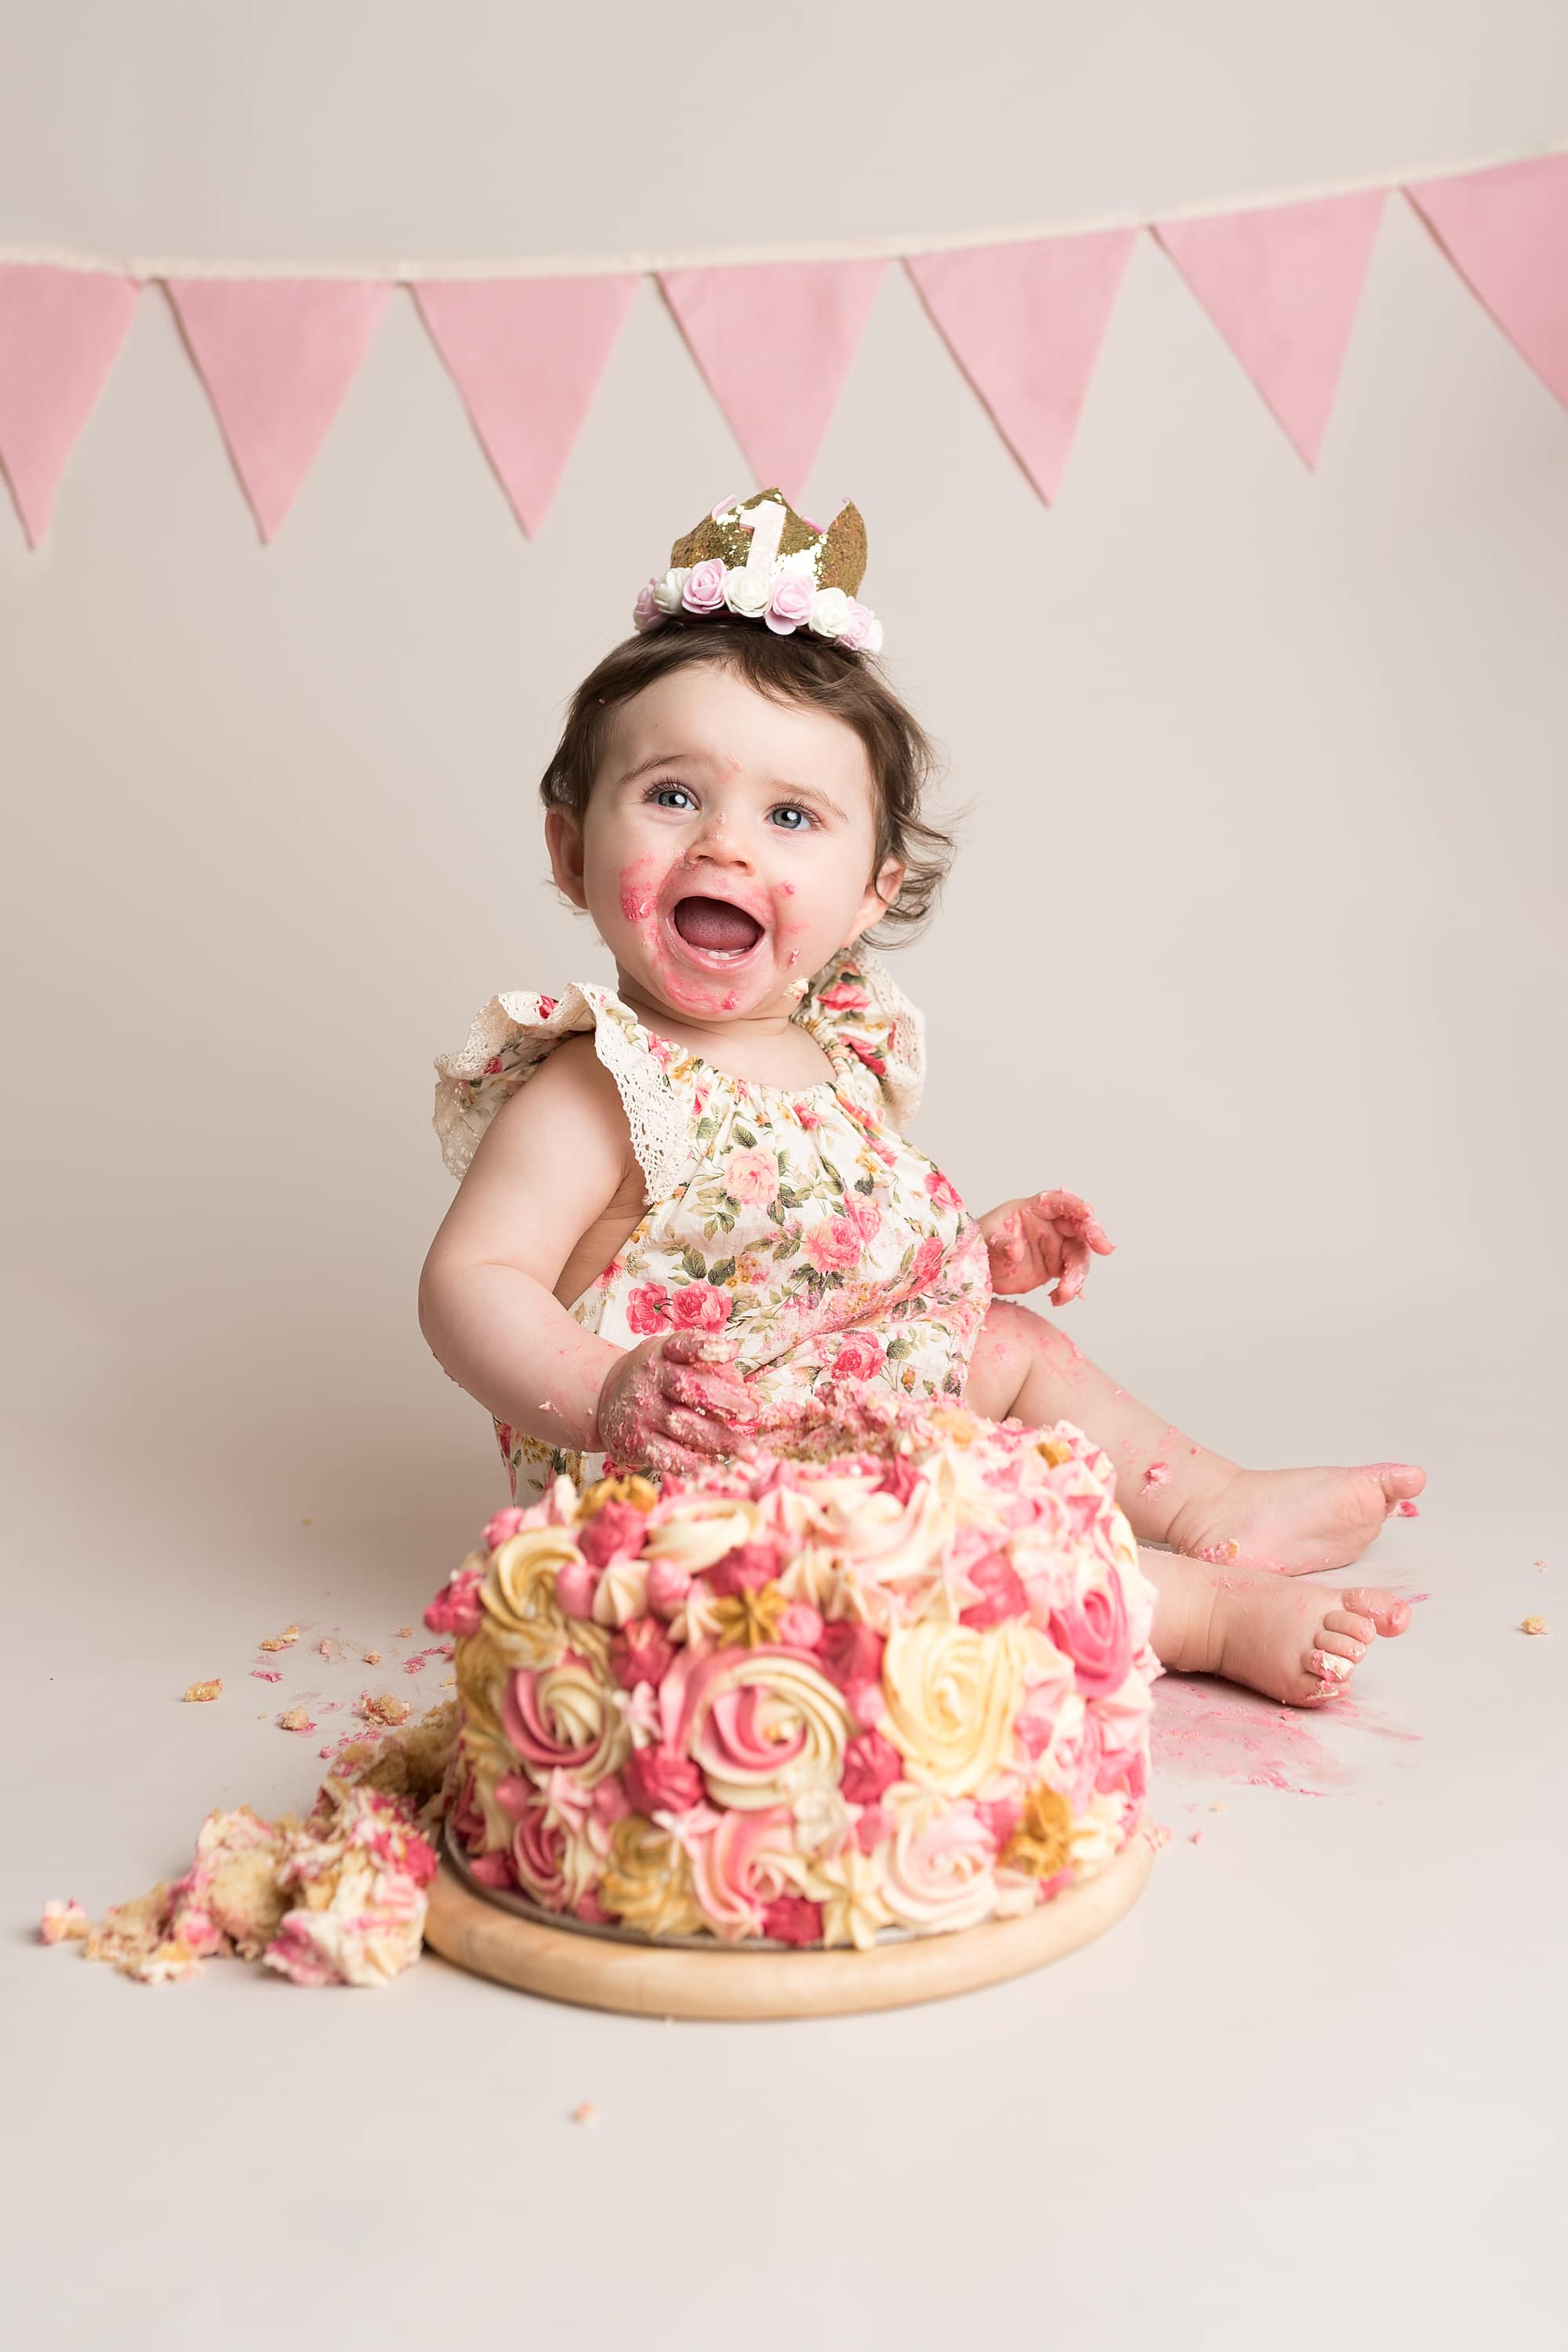 Cake Smash And Splash Maternity And Newborn Photographer In Birmingham